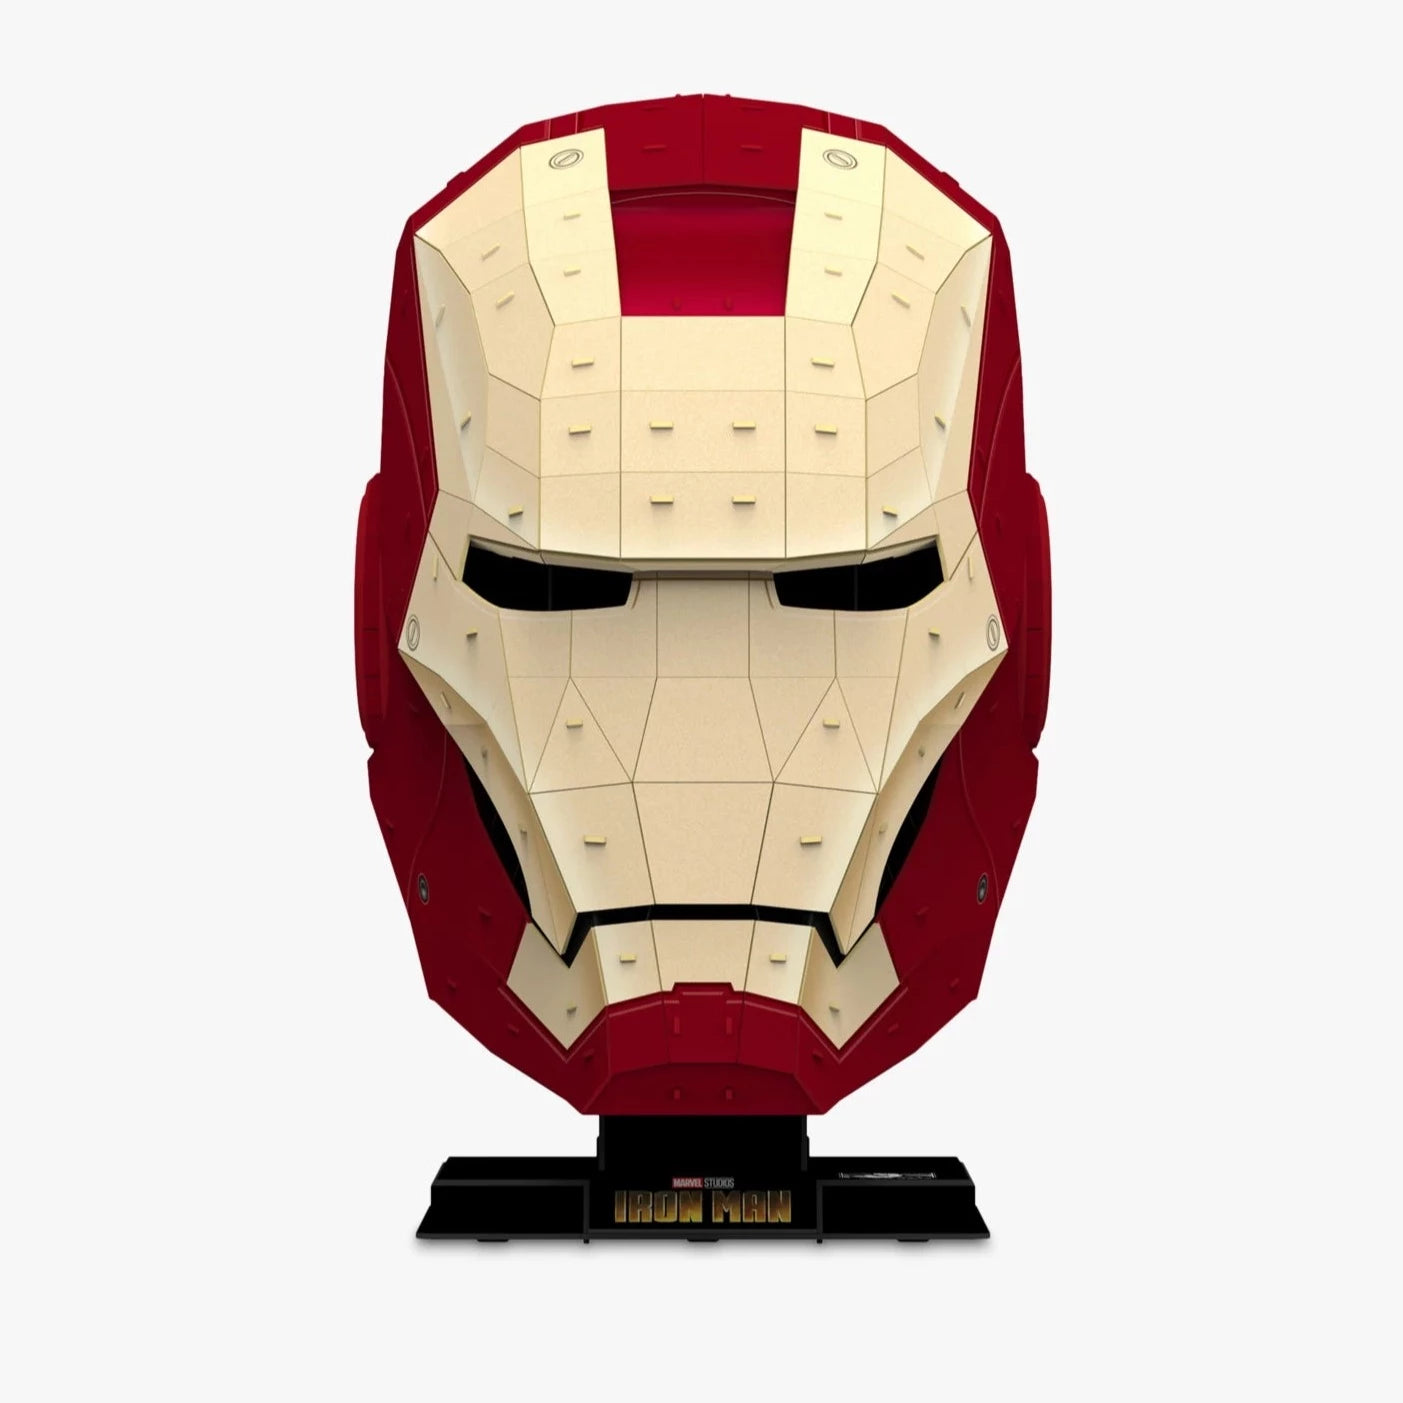 3D Puzzle | Marvel Studios: Iron Man Helmet Model - Weirs of Baggot St